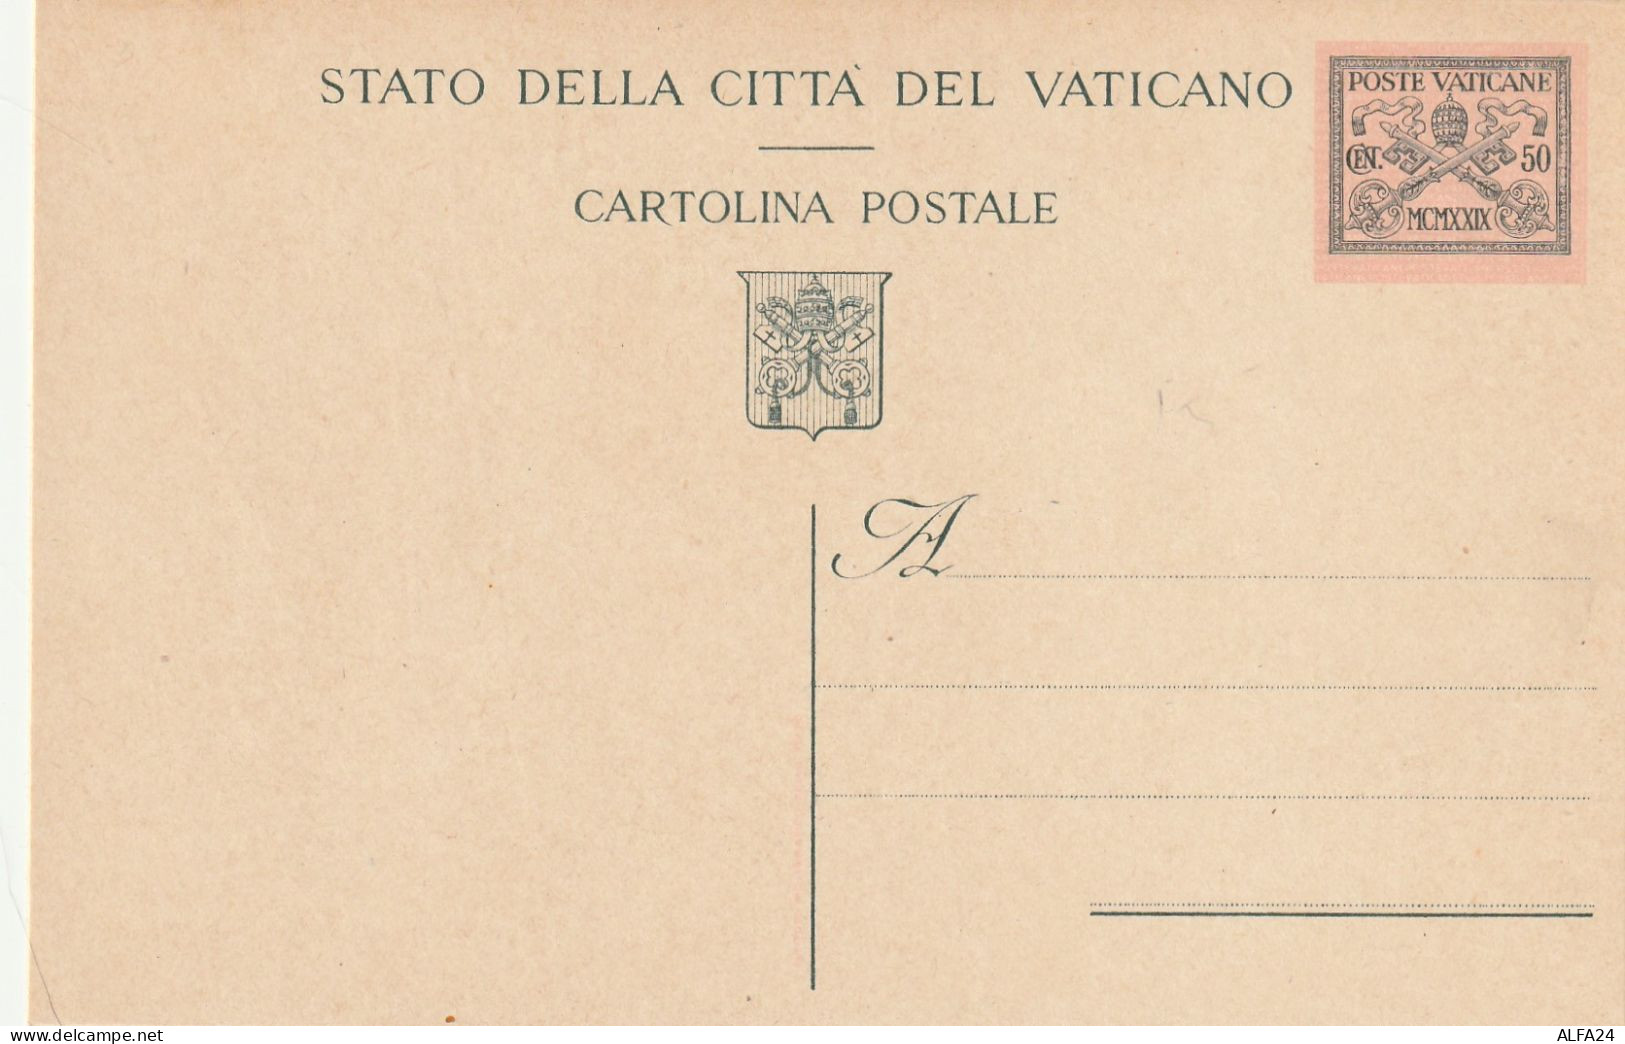 INTERO POSTALE NUOVO C.50 1930 VATICANO (ZP3817 - Enteros Postales